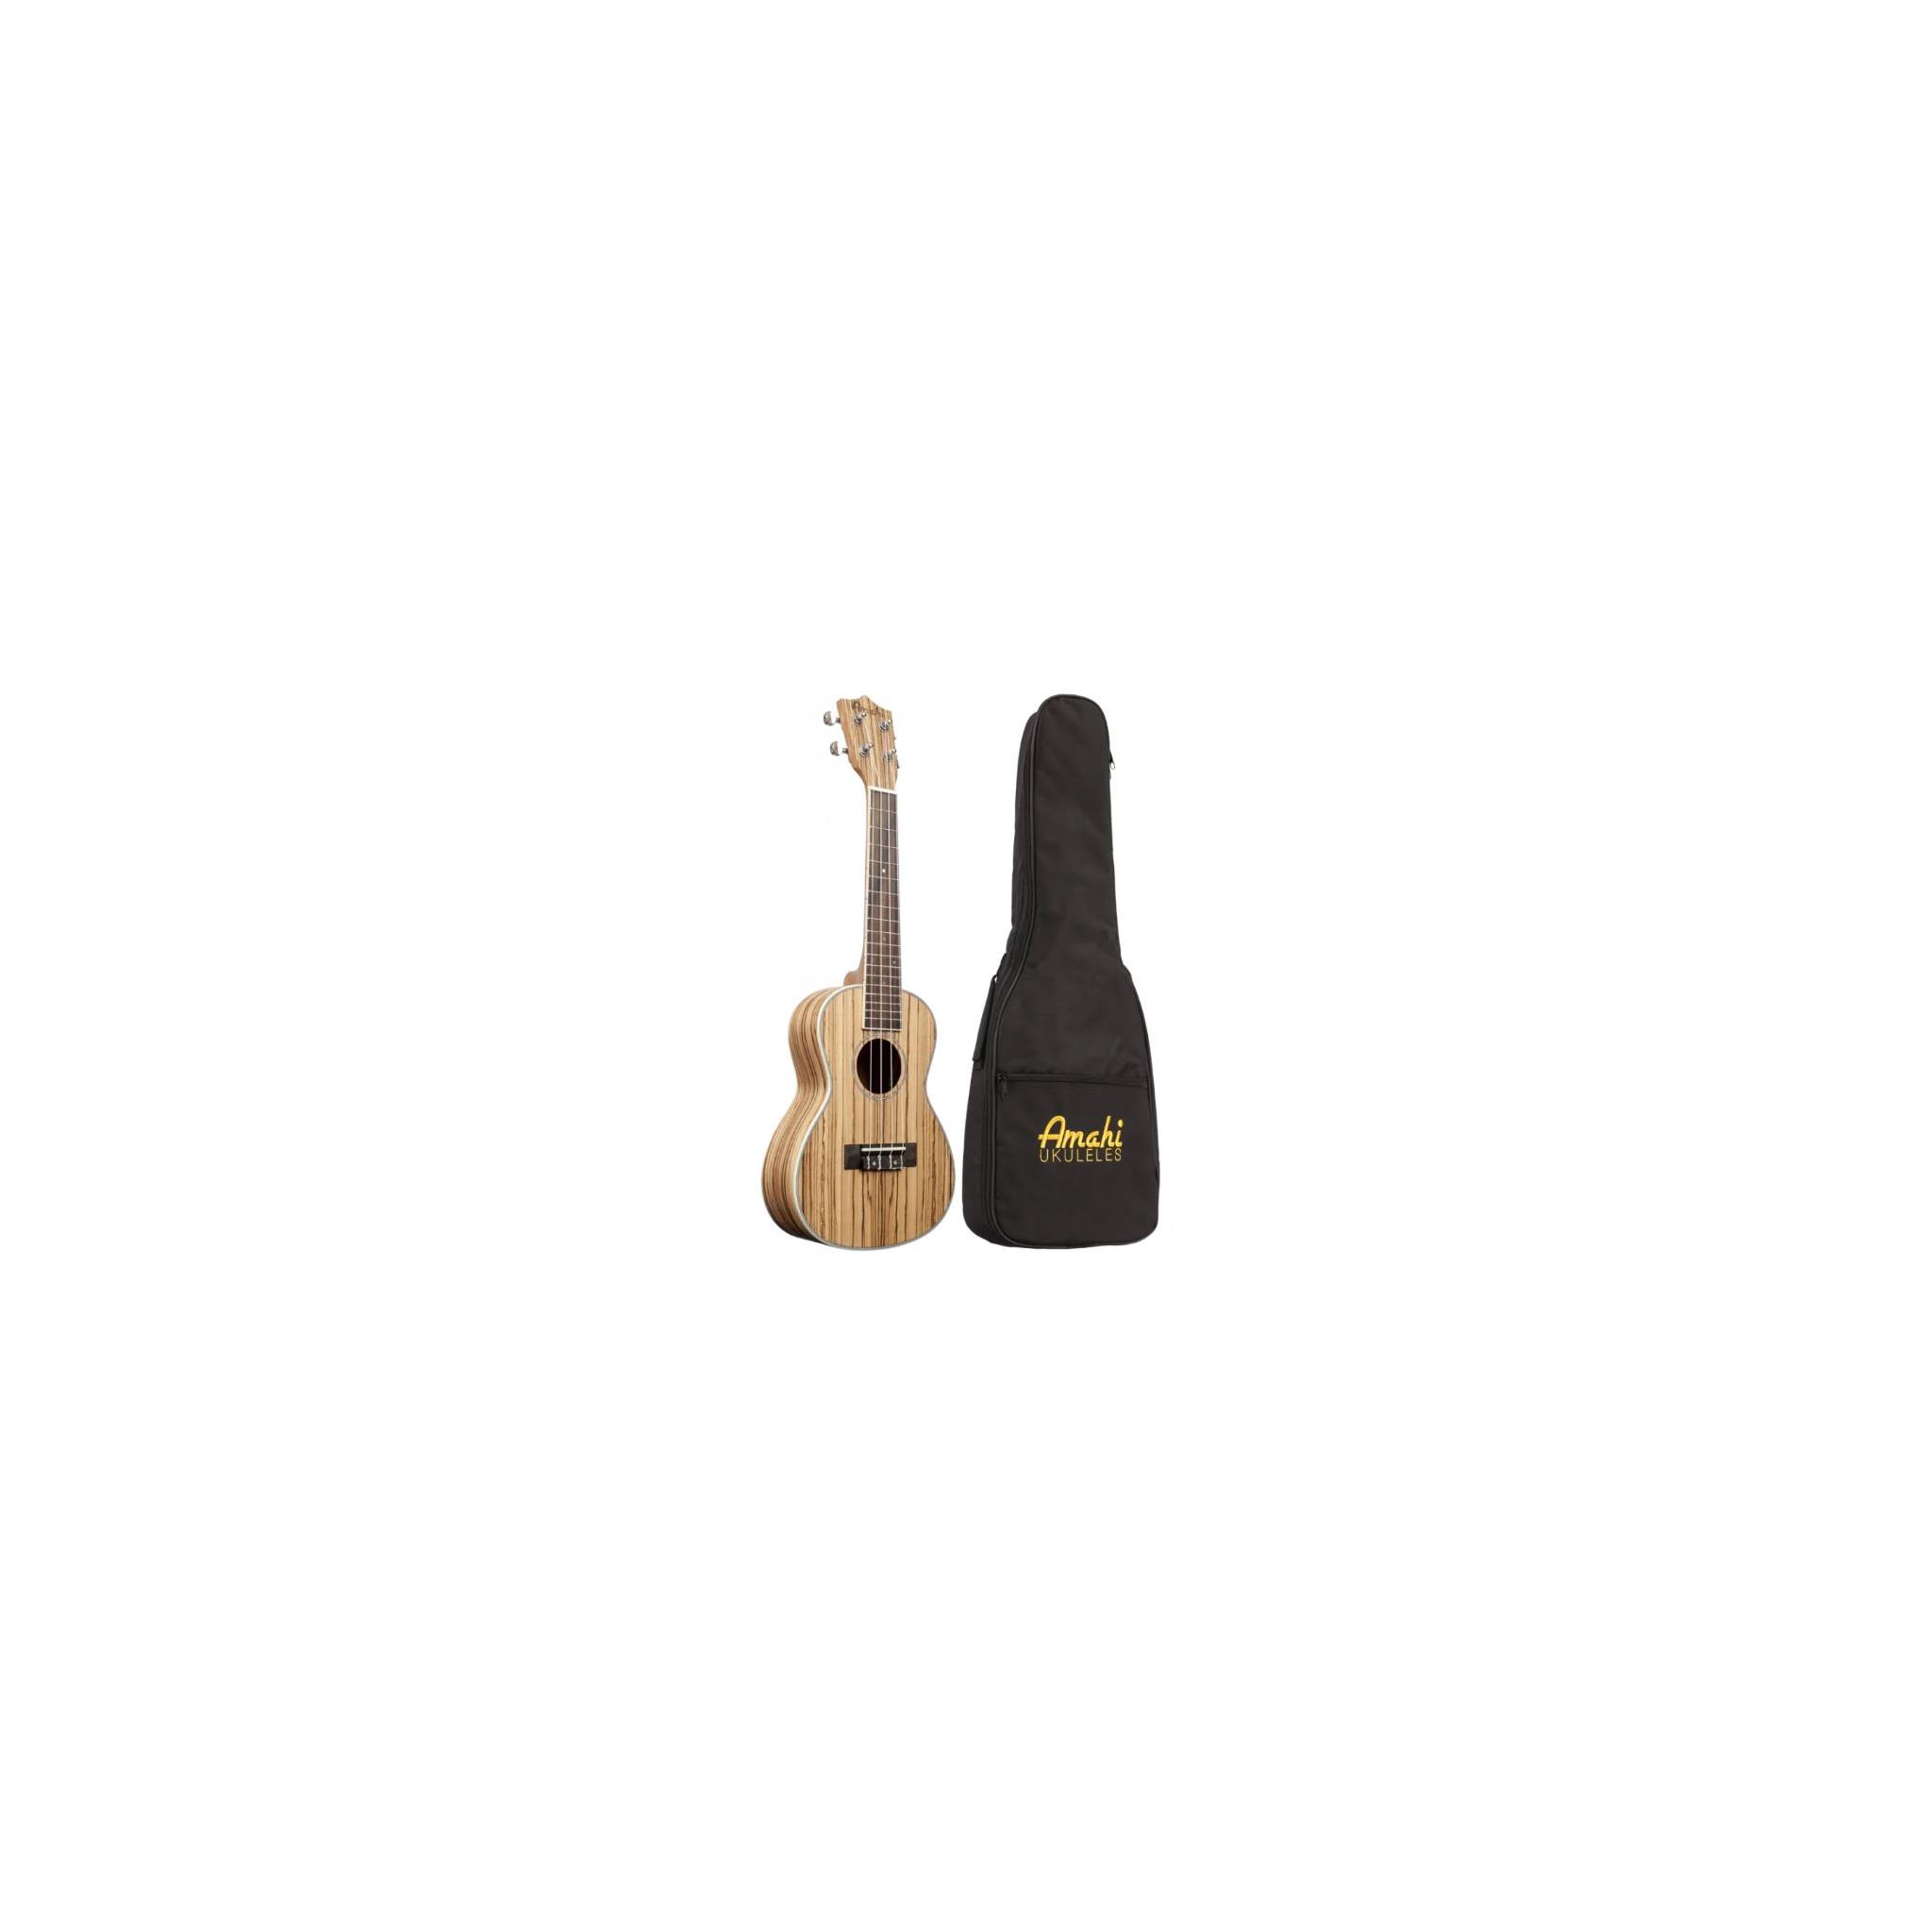 Amahi Concert Zebrawood Top, Back, Sides. Sealed Guitar Tuners UK330C, w/ Bag